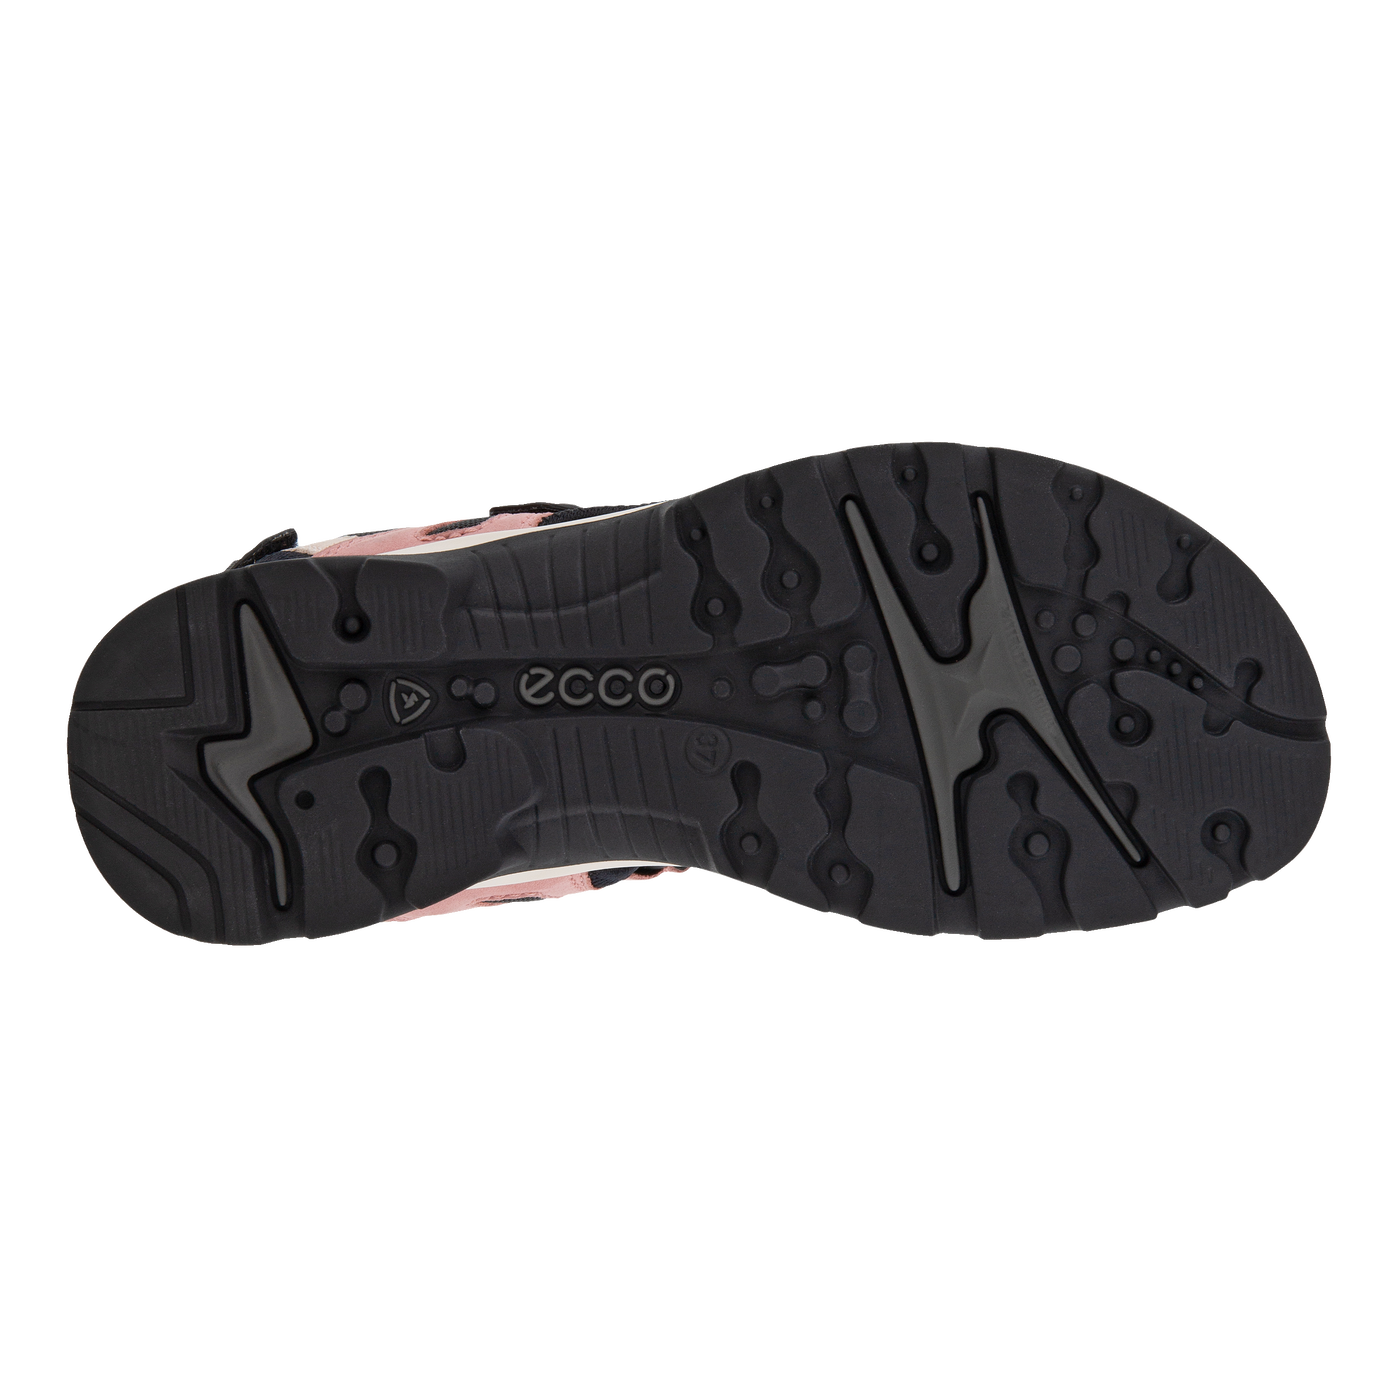 Offroad W 069563 - shoe&amp;me - Ecco - Sandal - Sandals, Summer, Womens